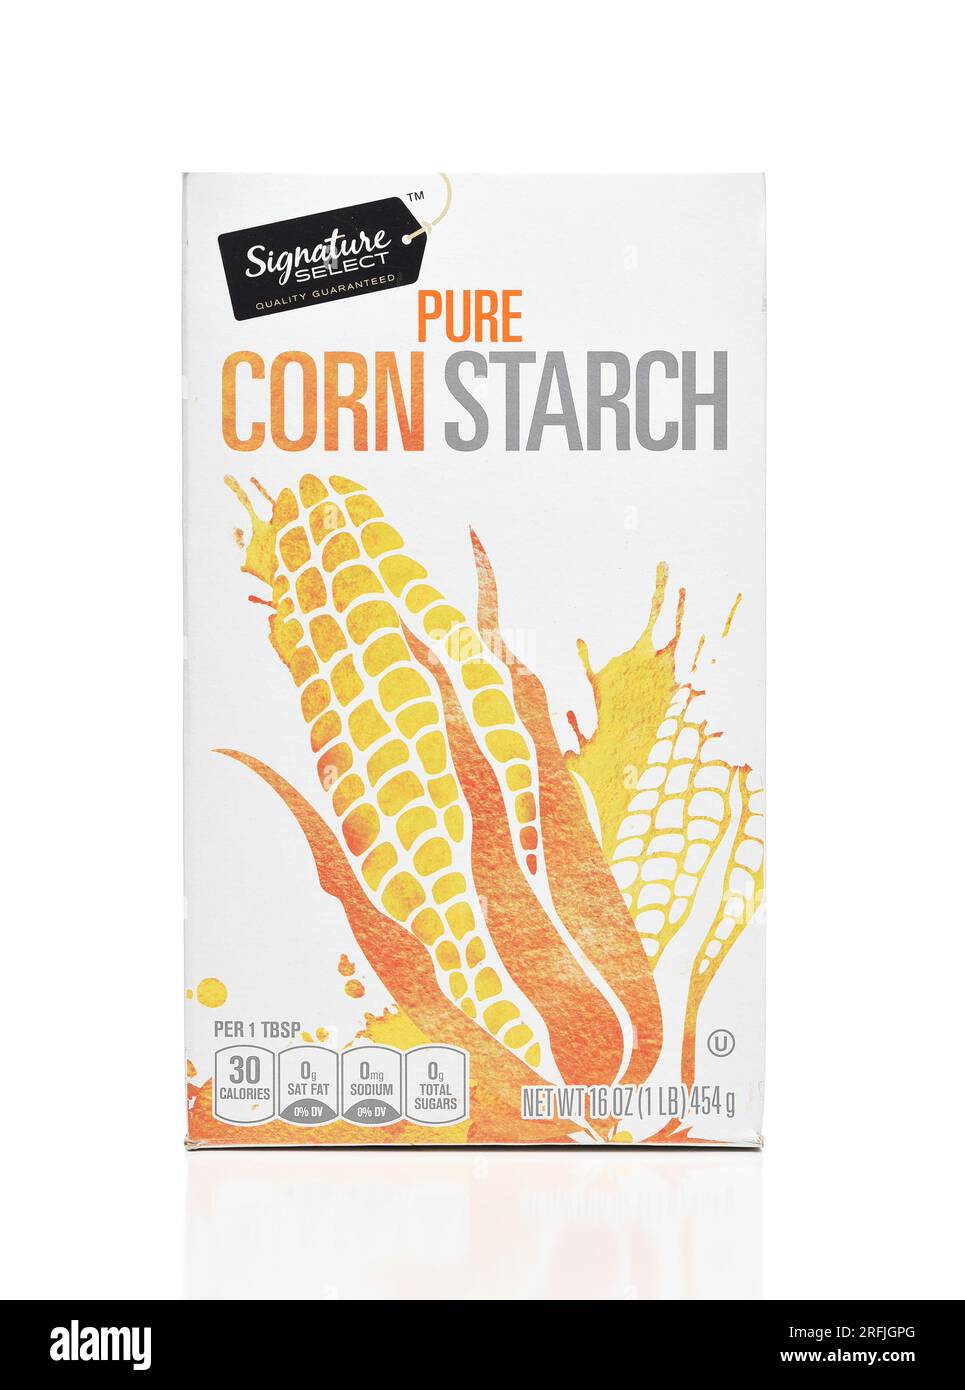 IRVINE, KALIFORNIEN - 3. AUGUST 2023: A Box of Signature Select Pure Corn Starch. Stockfoto